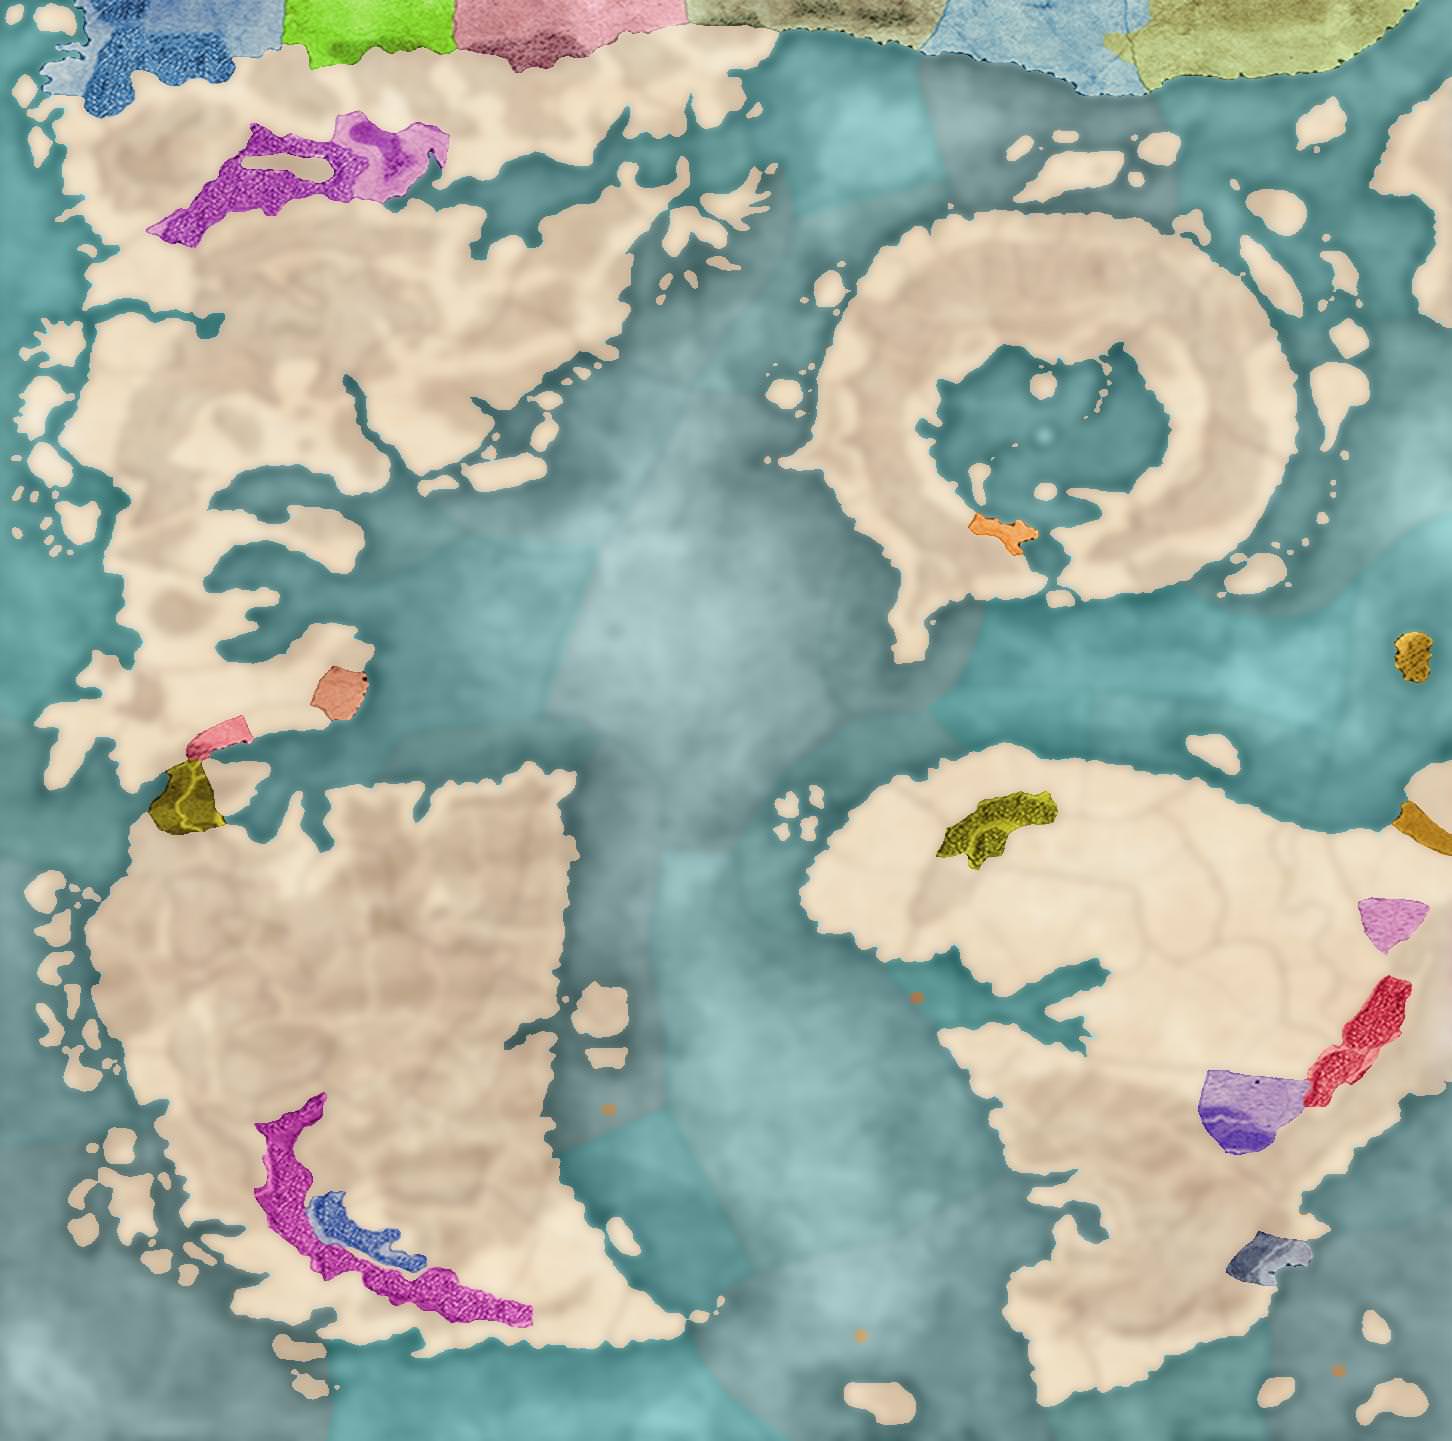 warhammer 2 campaign map